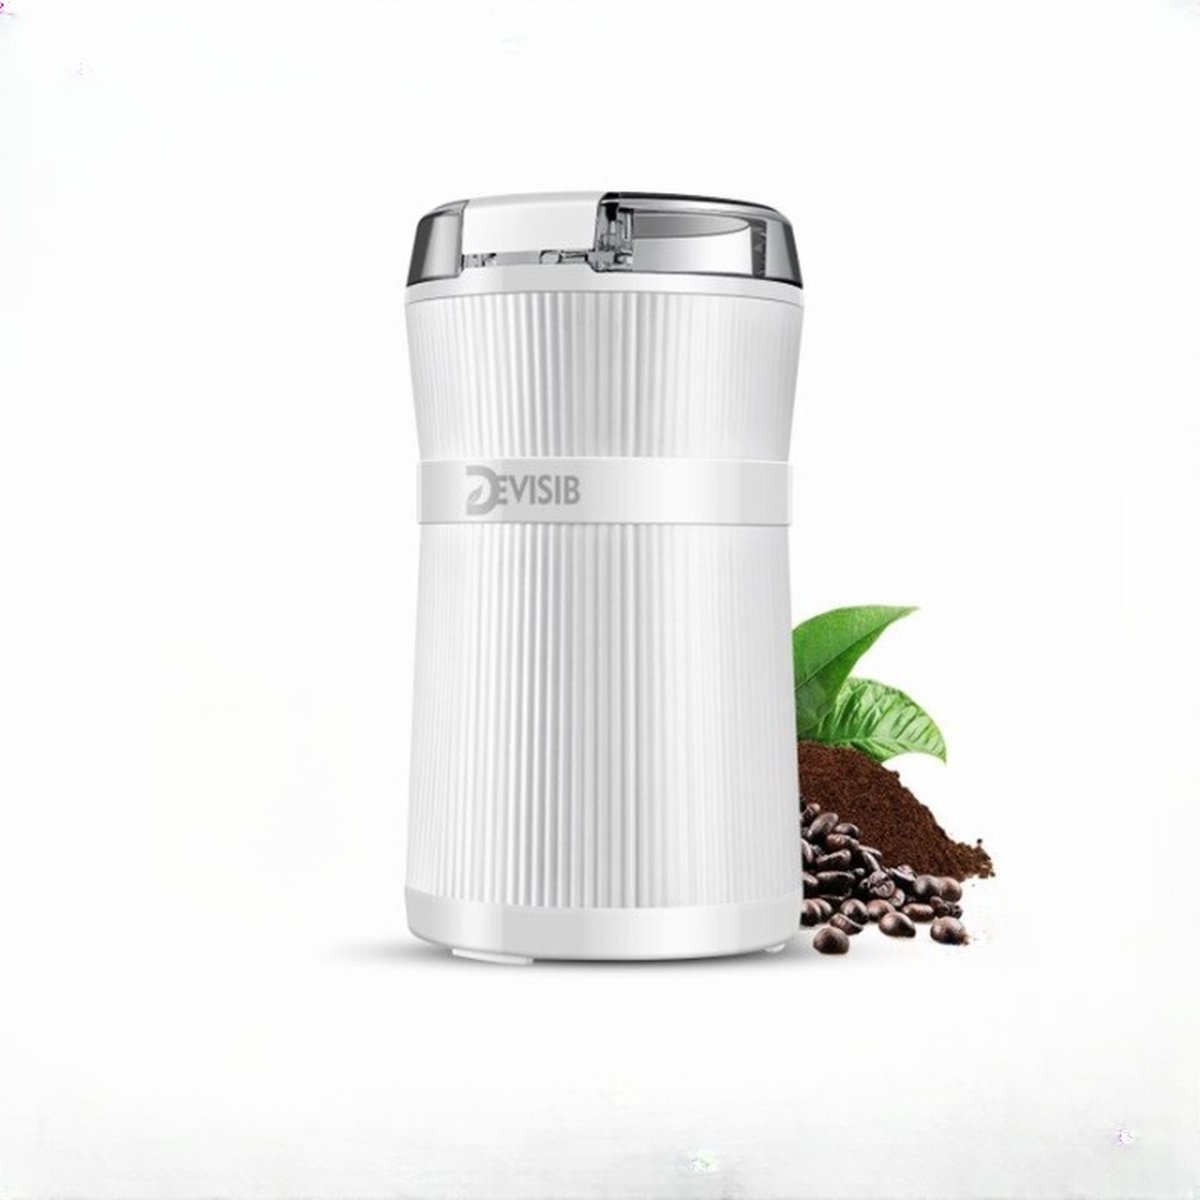 Koffie kenners koffiemolen electrisch 200W 50g 8 kopjes koffiemolen RVS wit